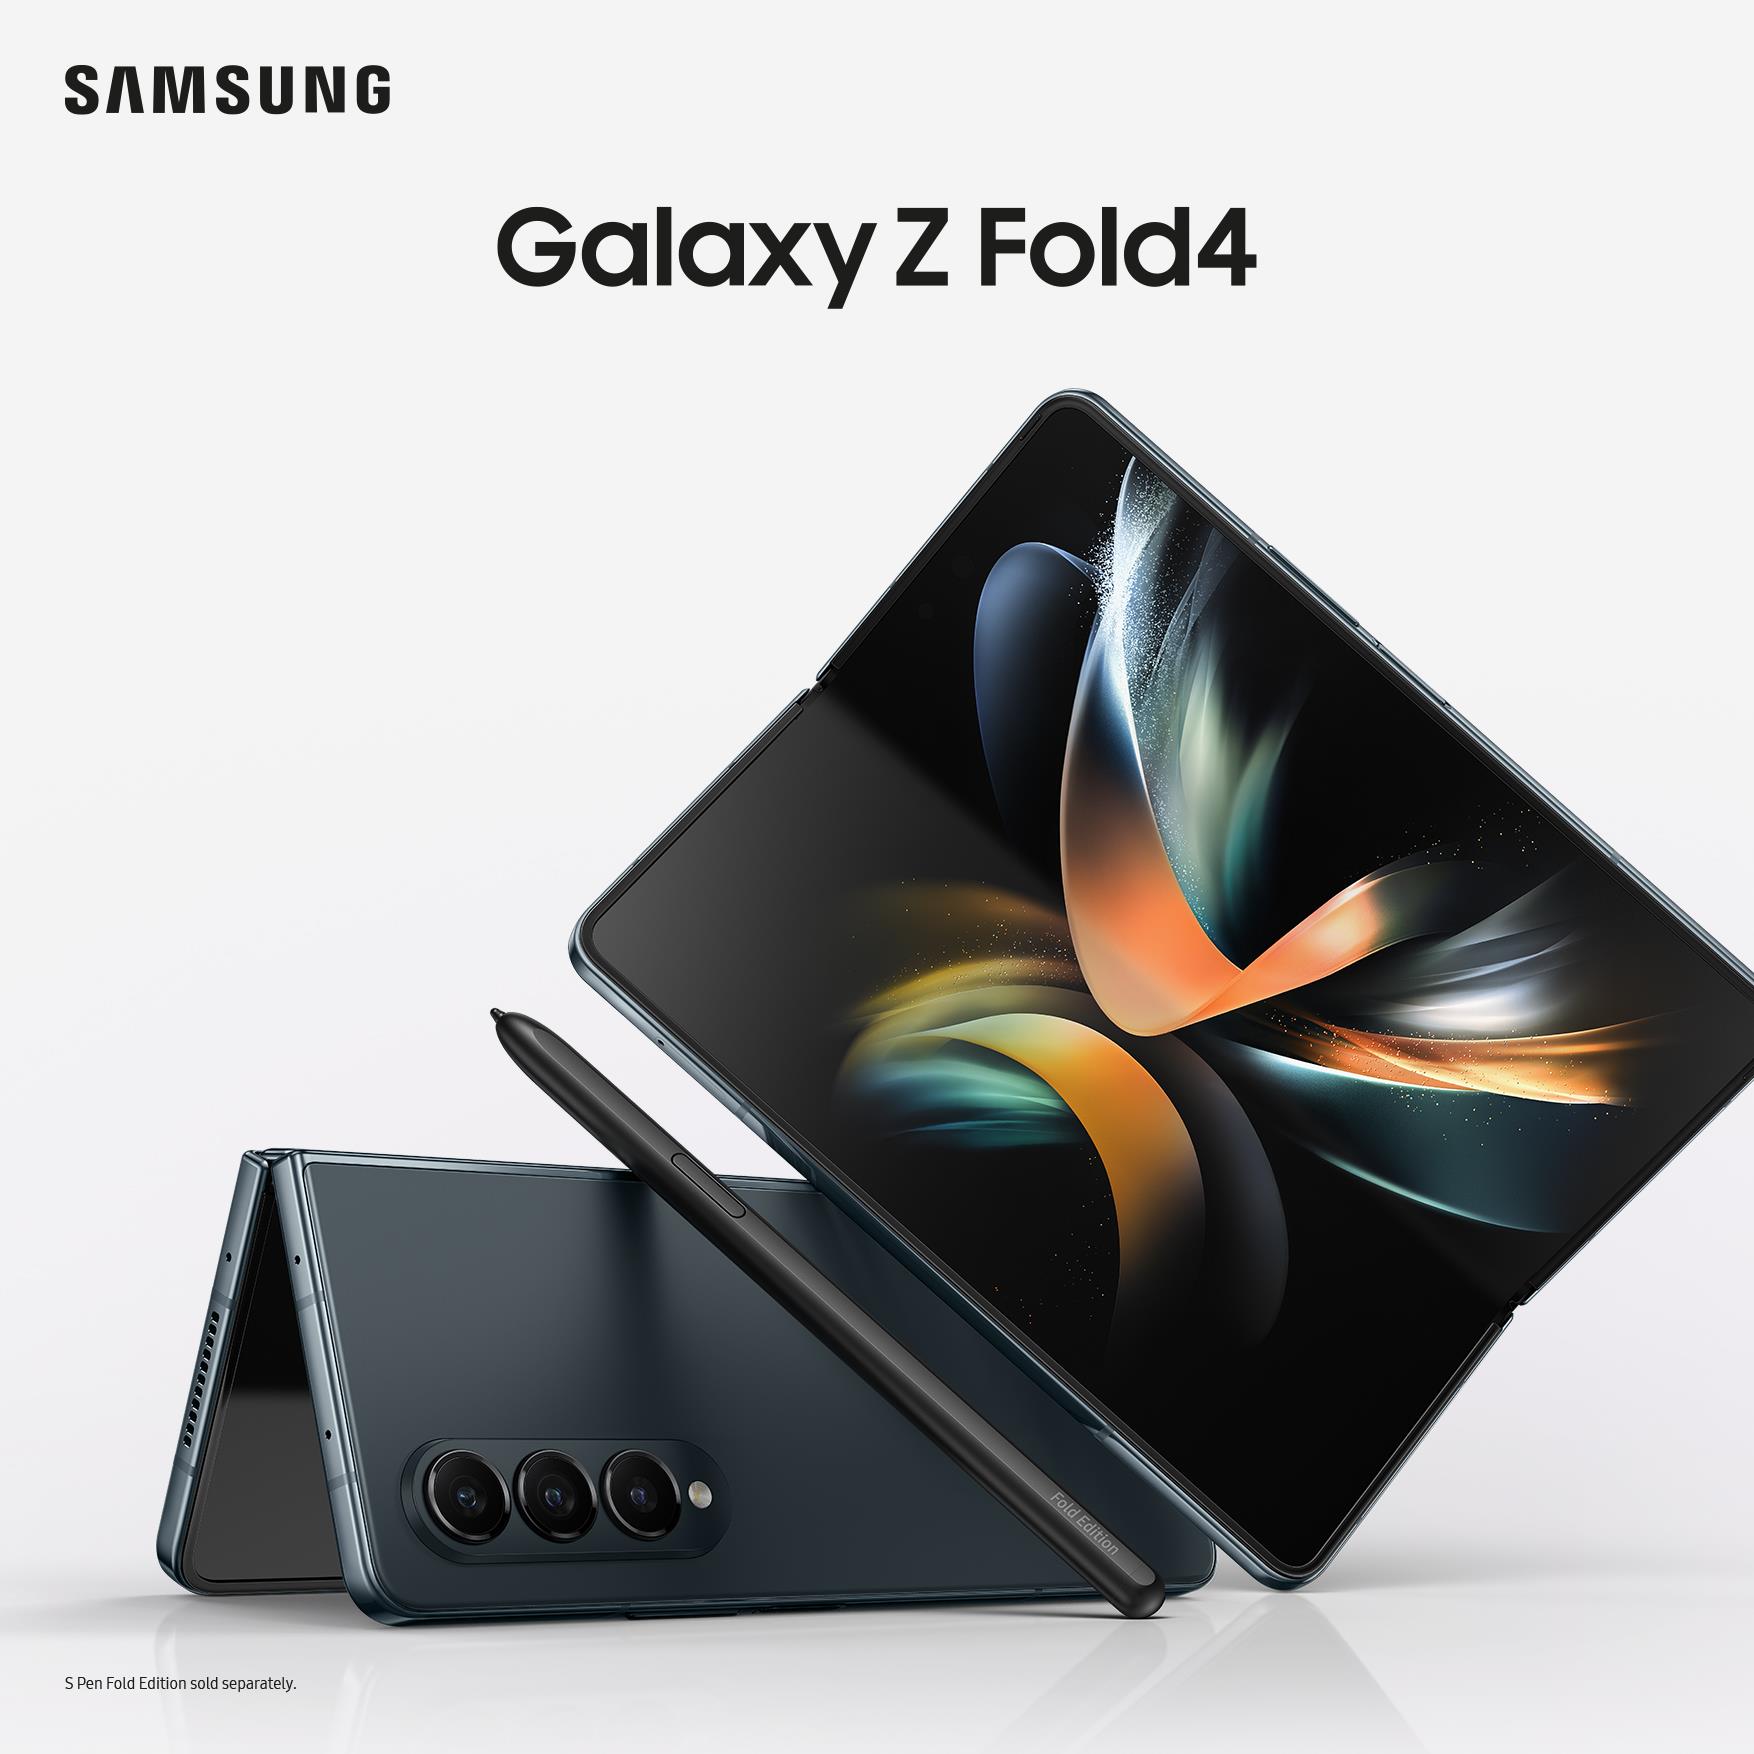 Samsung Galaxy Z Fold4 – Unfold Your World